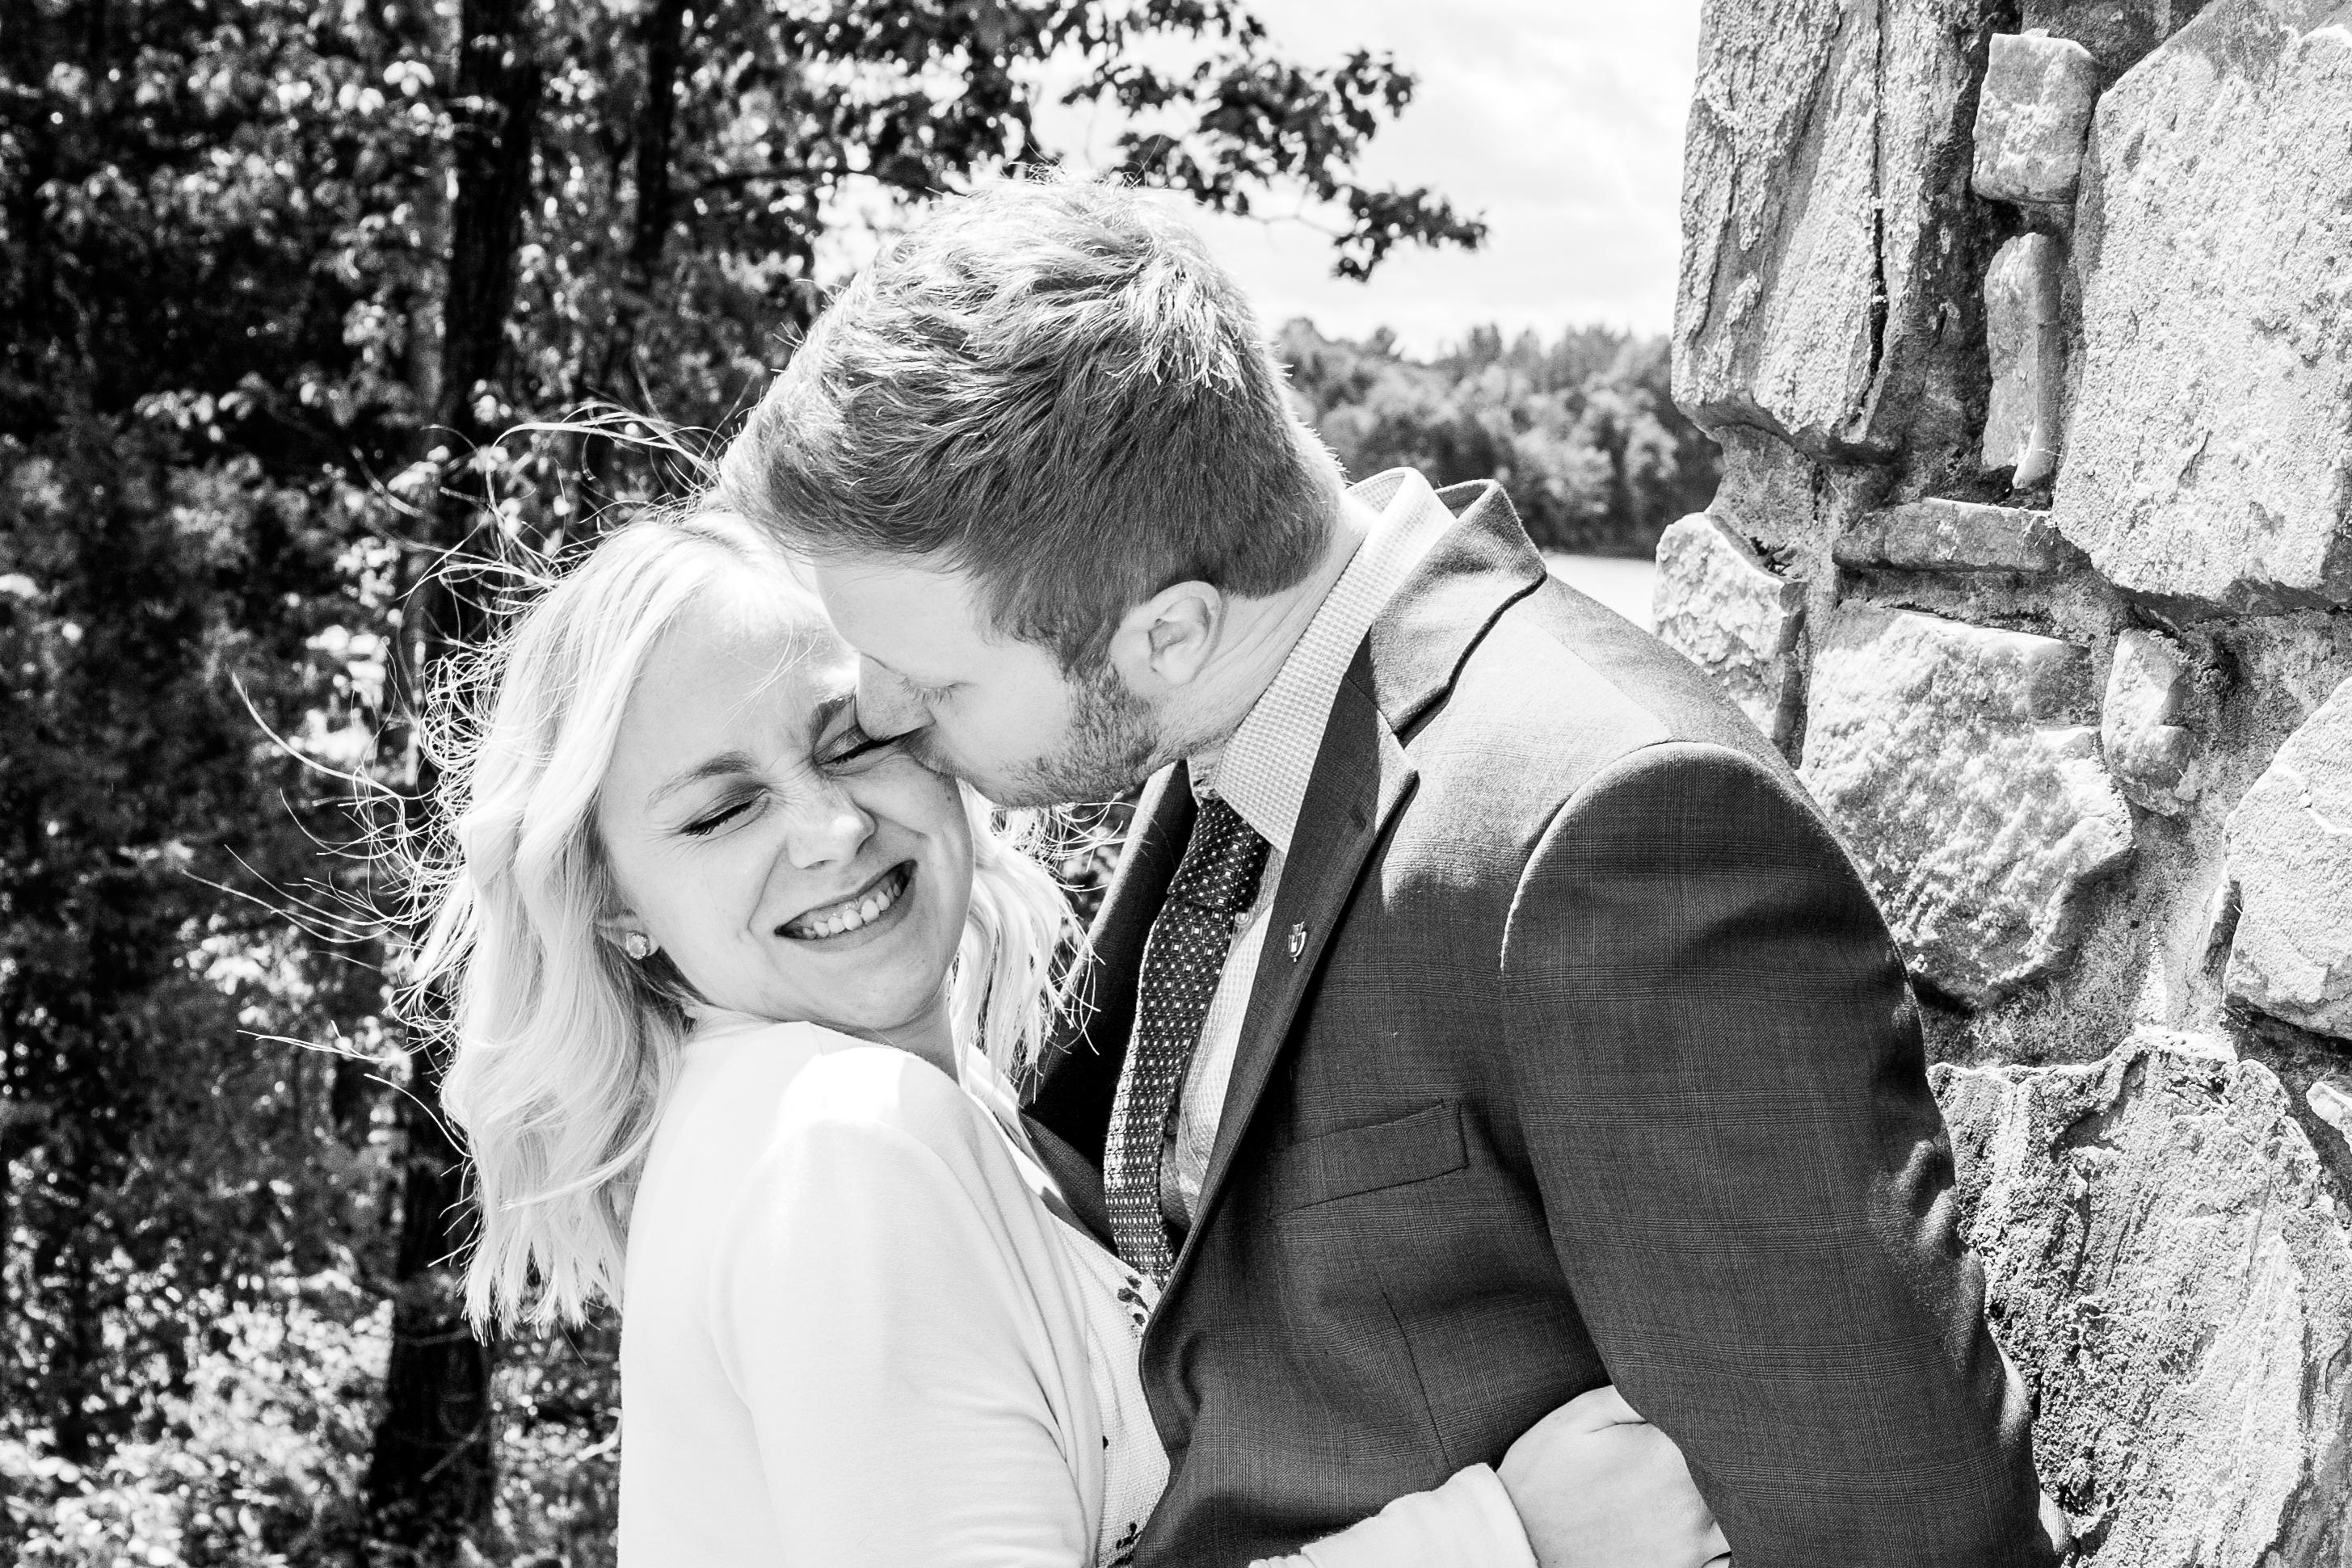 The Wedding Website of Jordan Allison and Rook Marshall